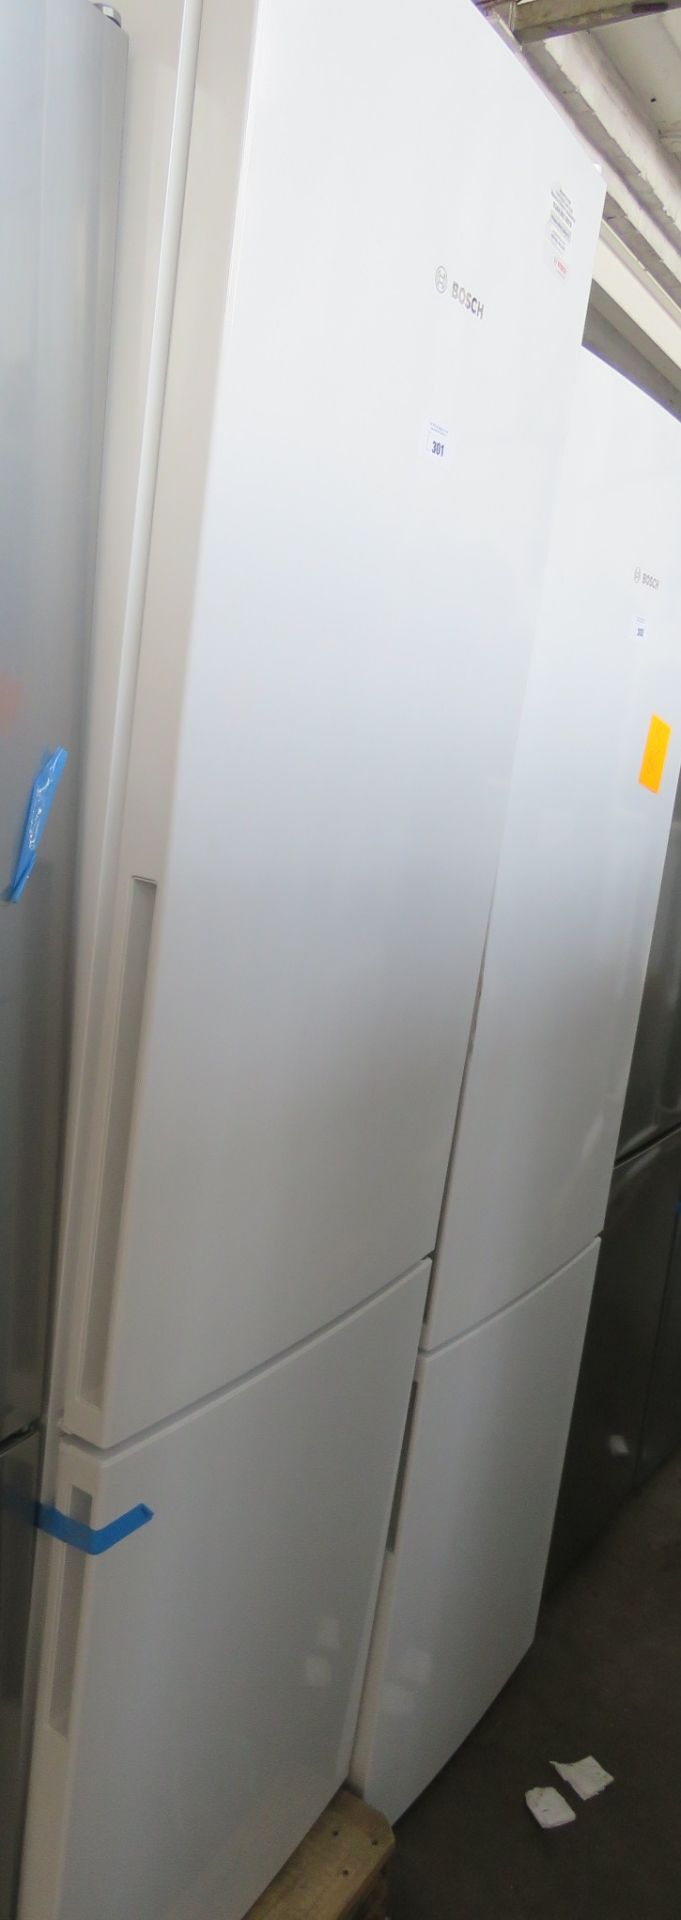 KGV39VWEAGB Bosch Free-standing fridge-freezer